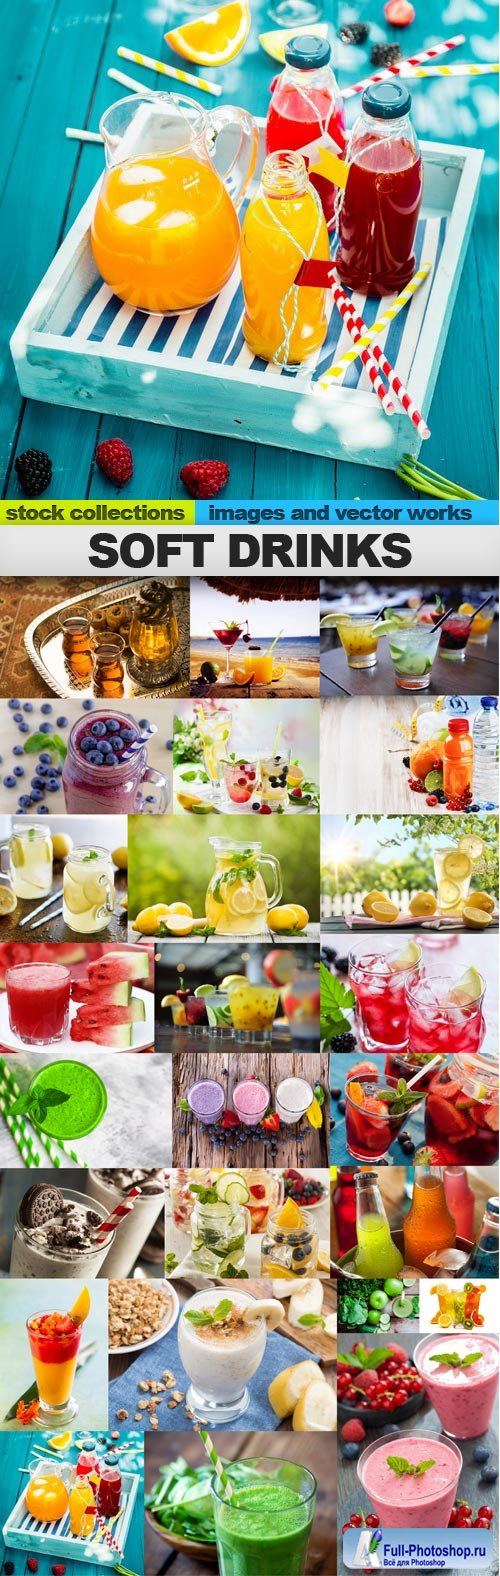 Soft drinks